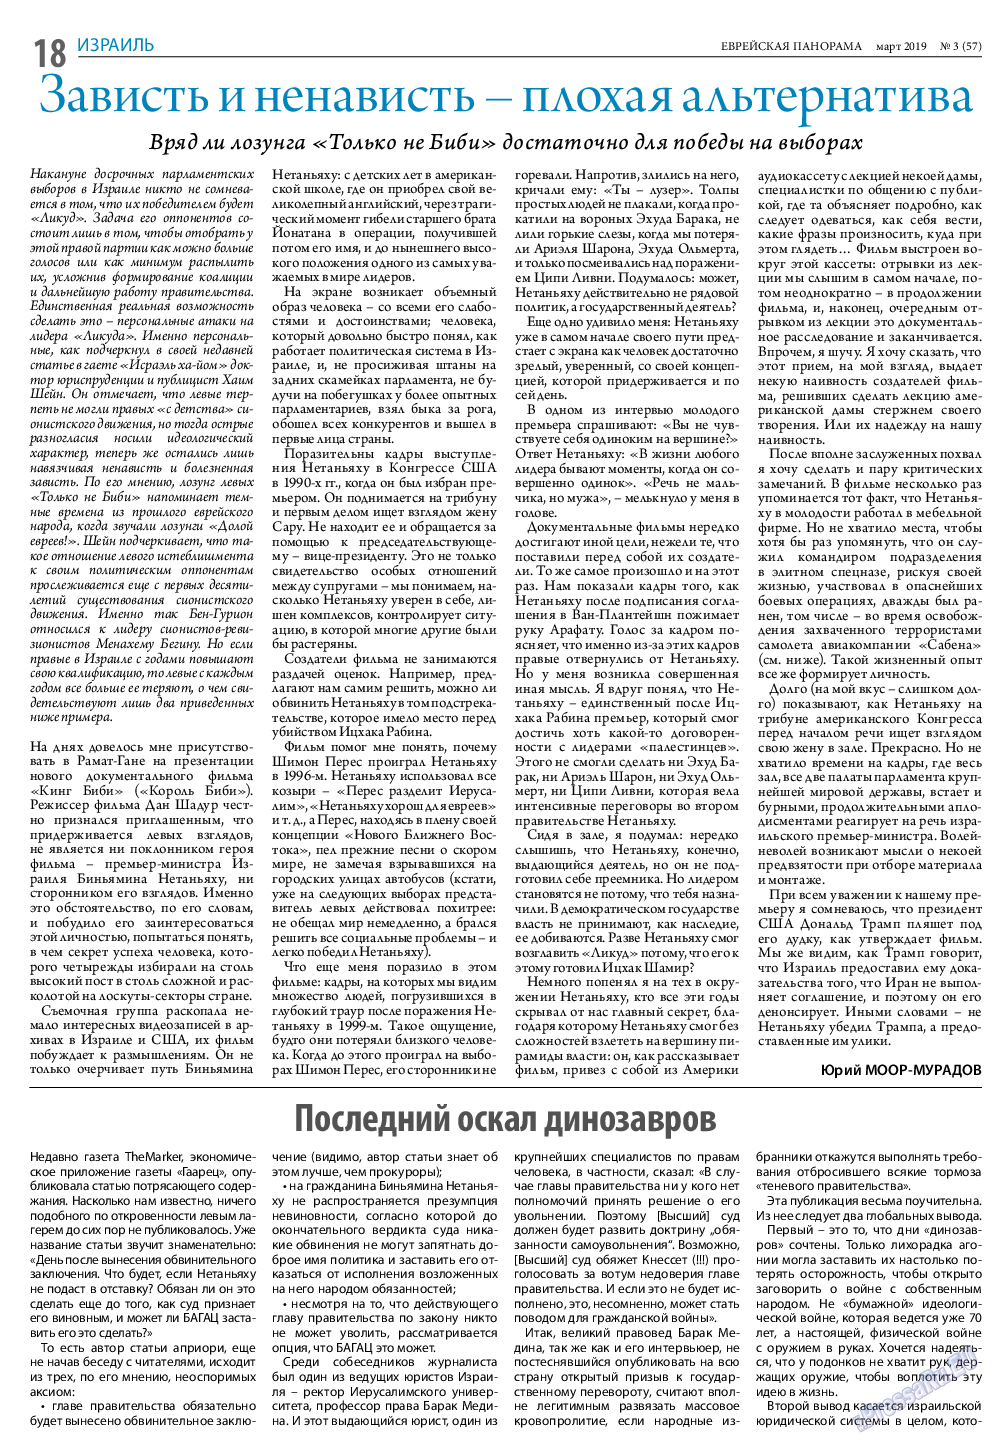 Еврейская панорама, газета. 2019 №3 стр.18